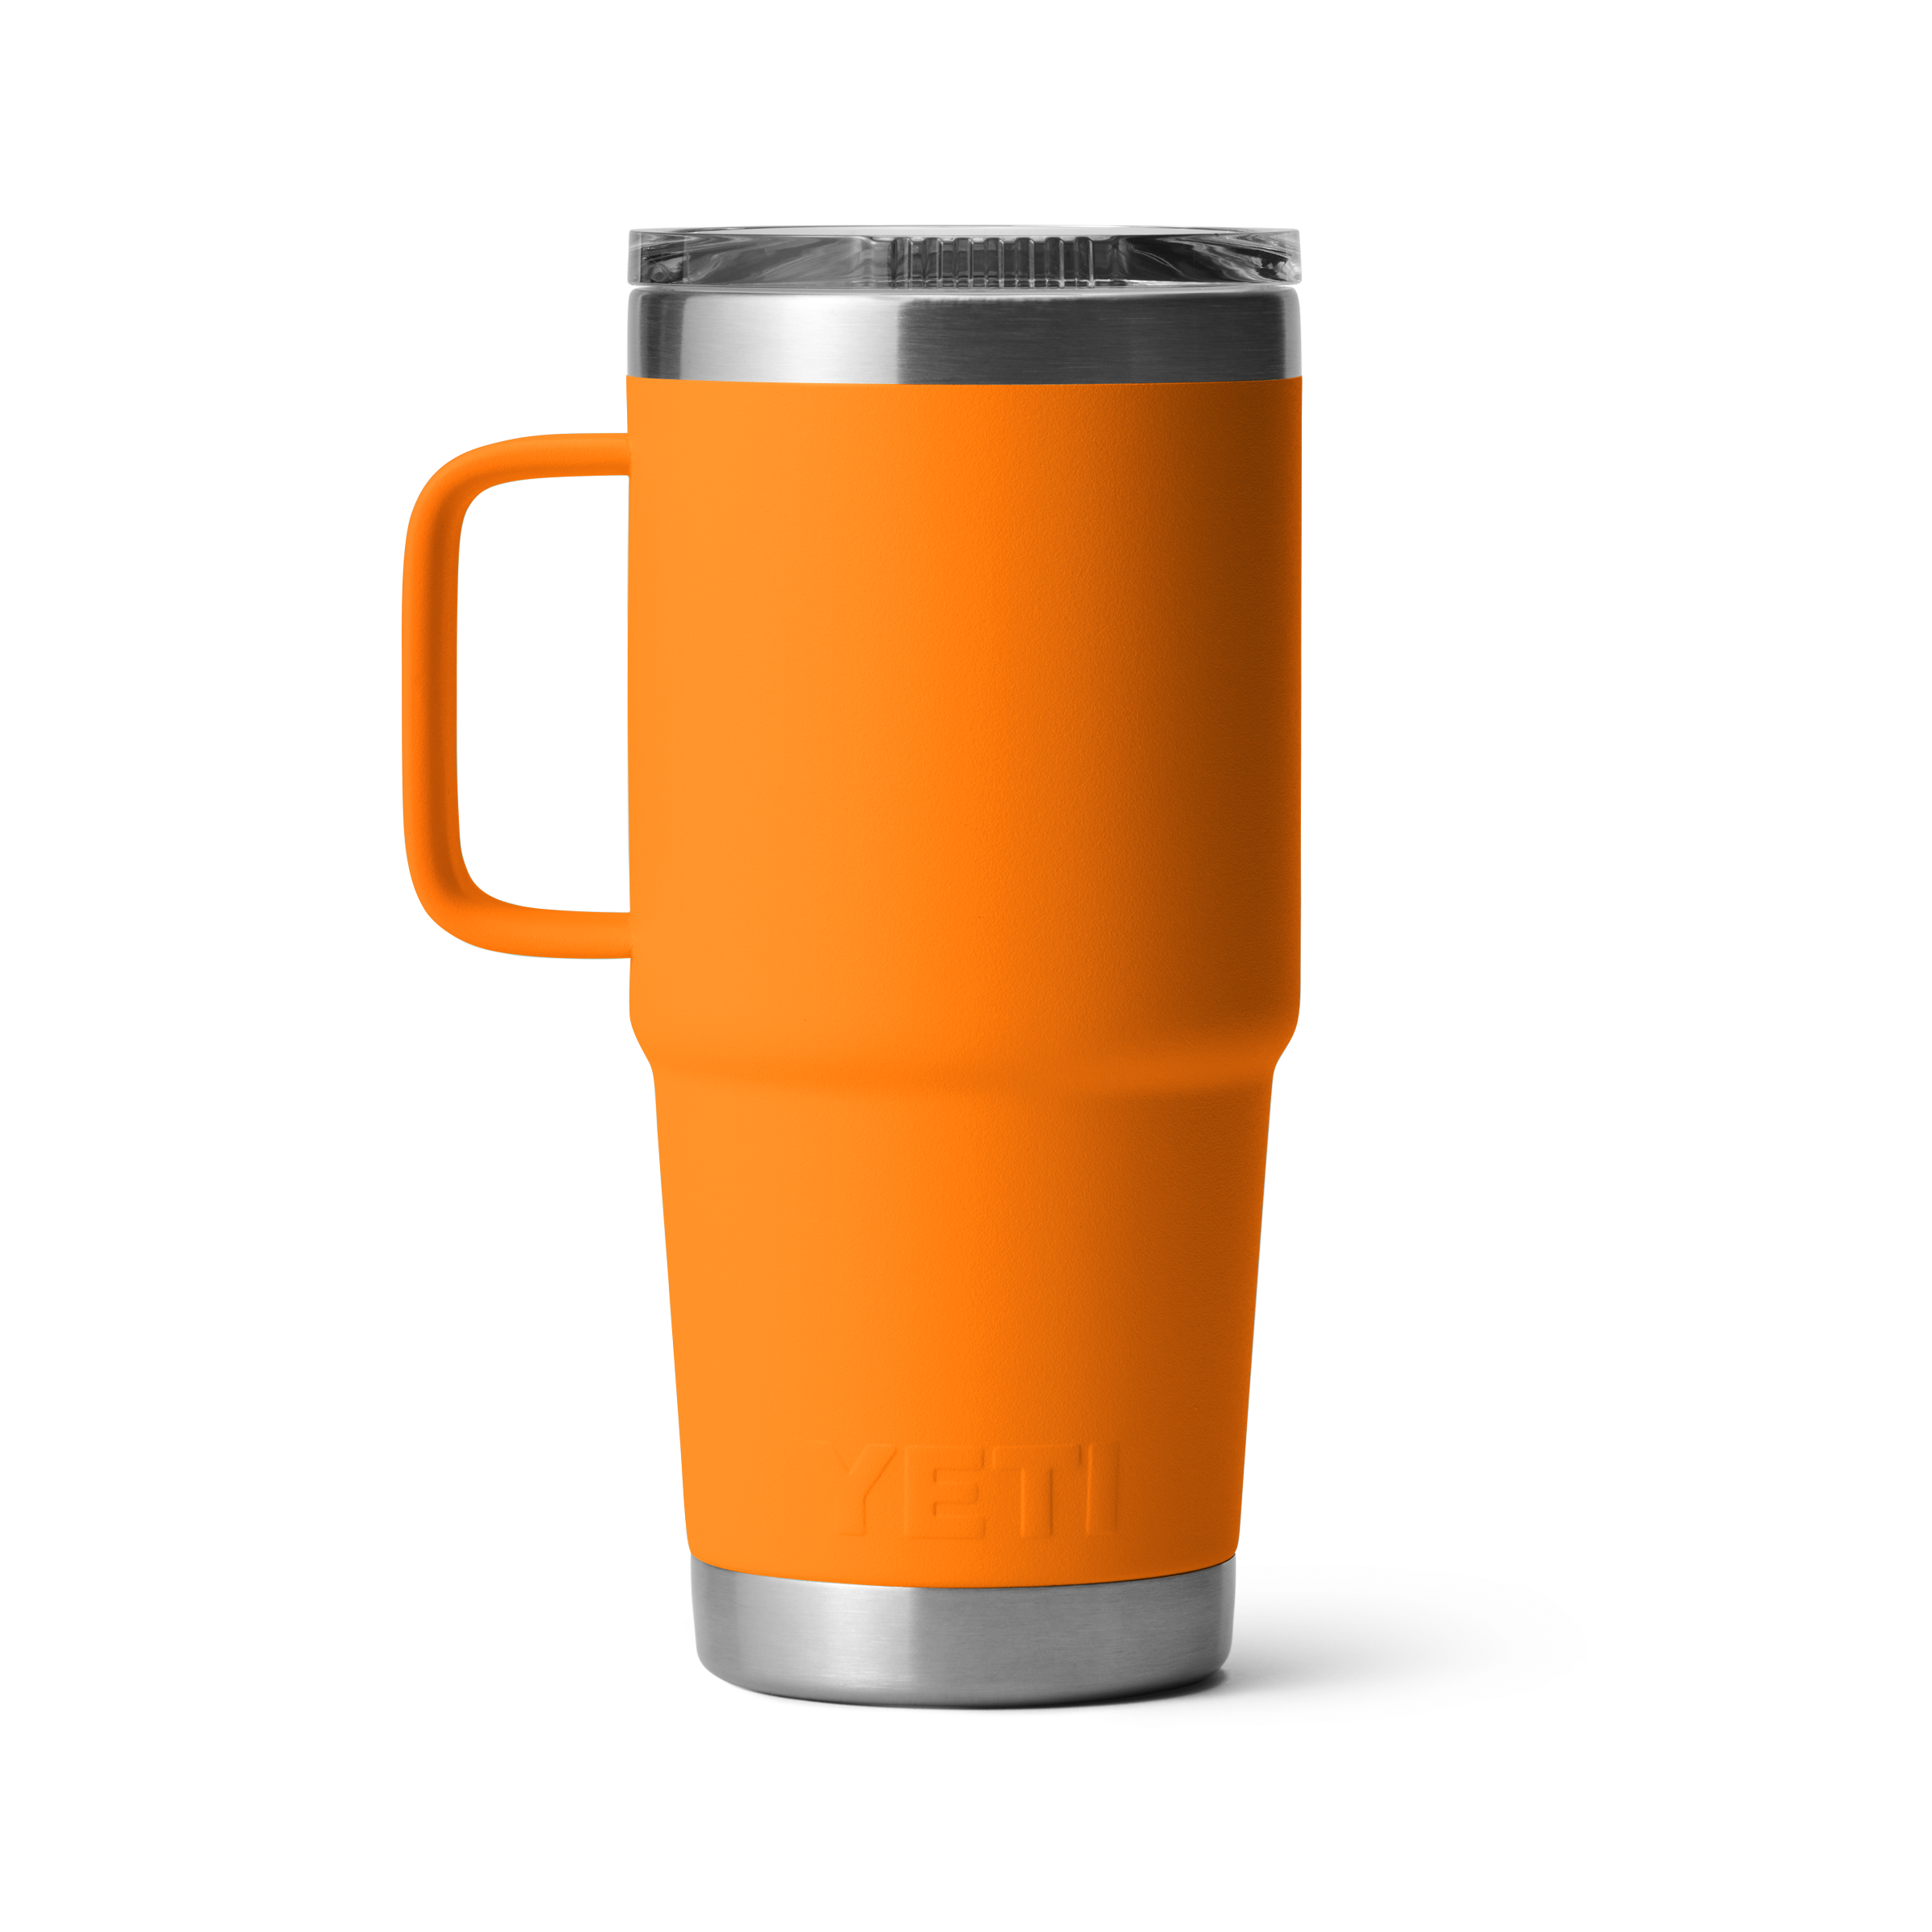 orange, travel mug, fits in cupholders, keeps warm drinks warm, keeps cold drinks cold, leak resistance lid, puncture and rust resistant